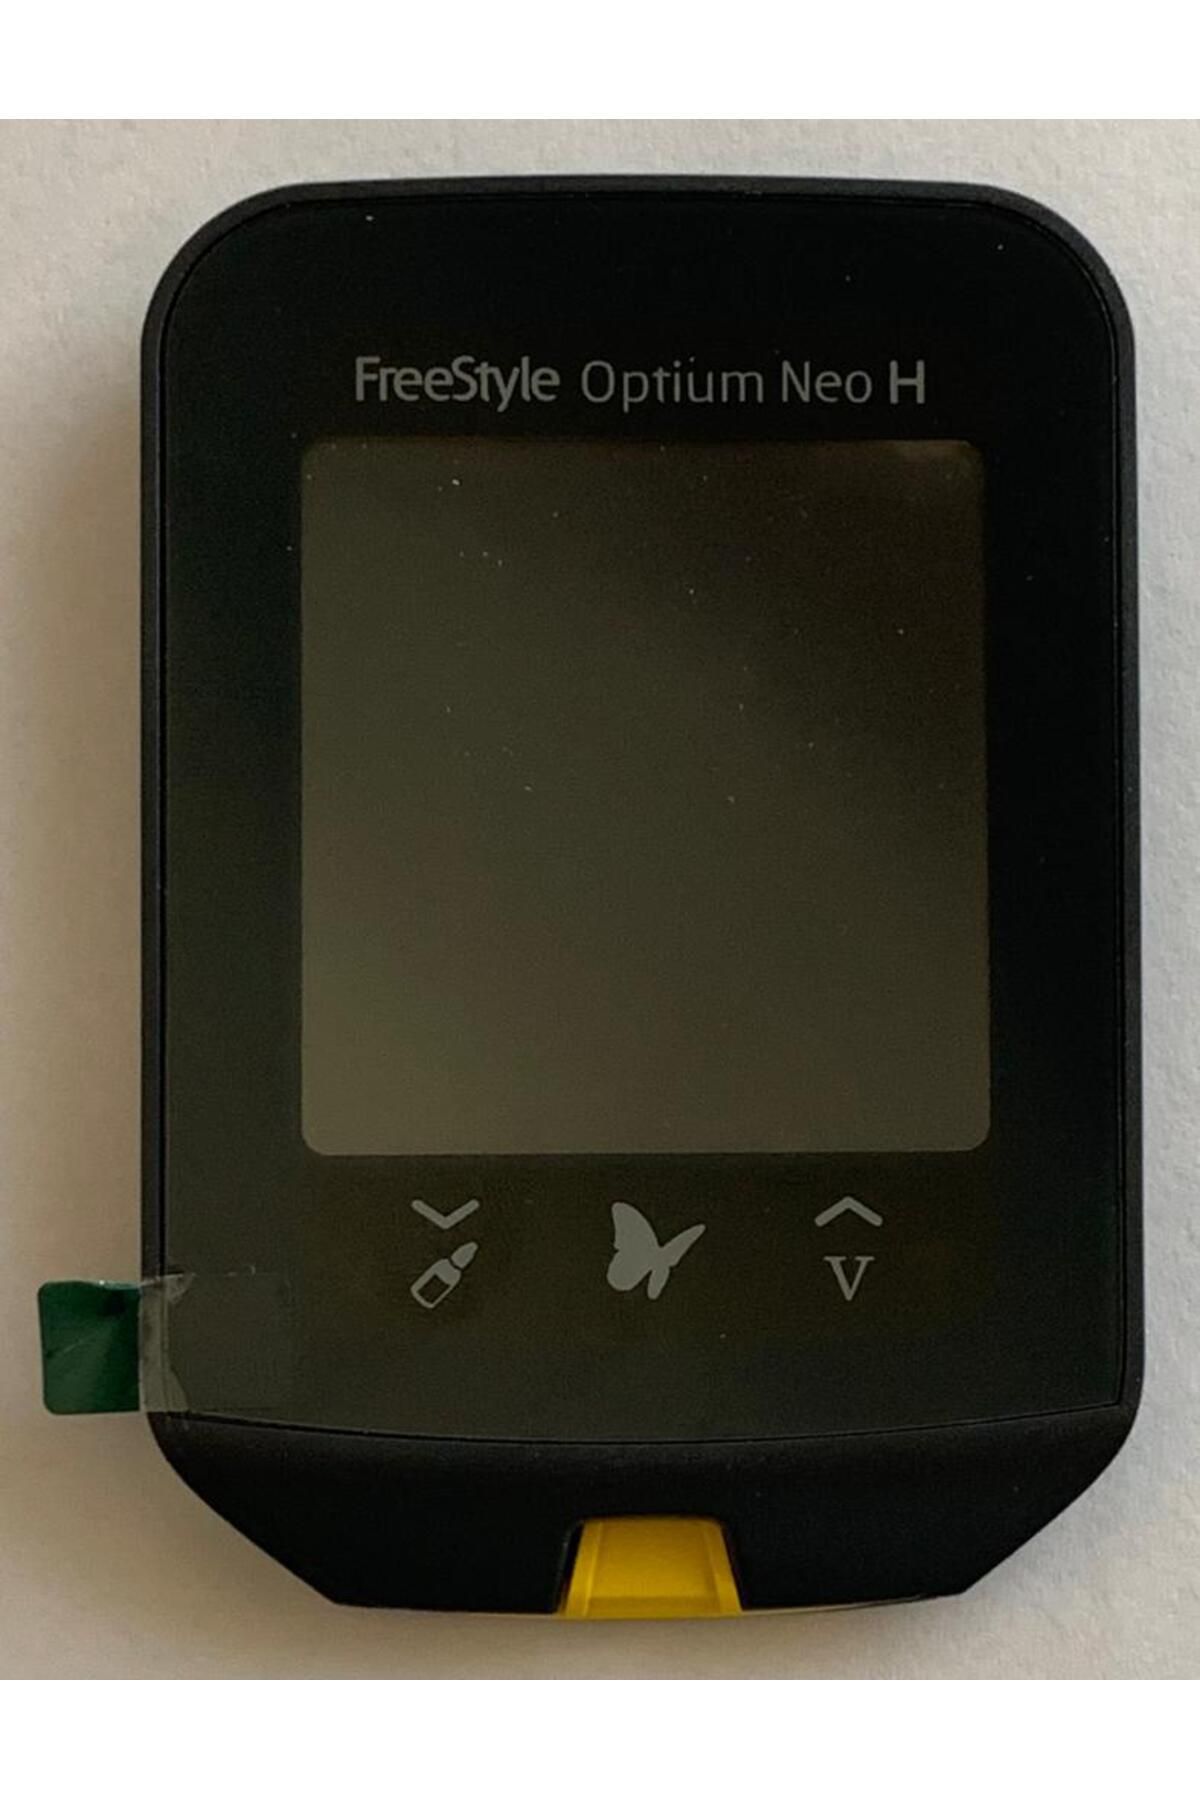 Freestyle Optium Neo H Meter 5020179, one size